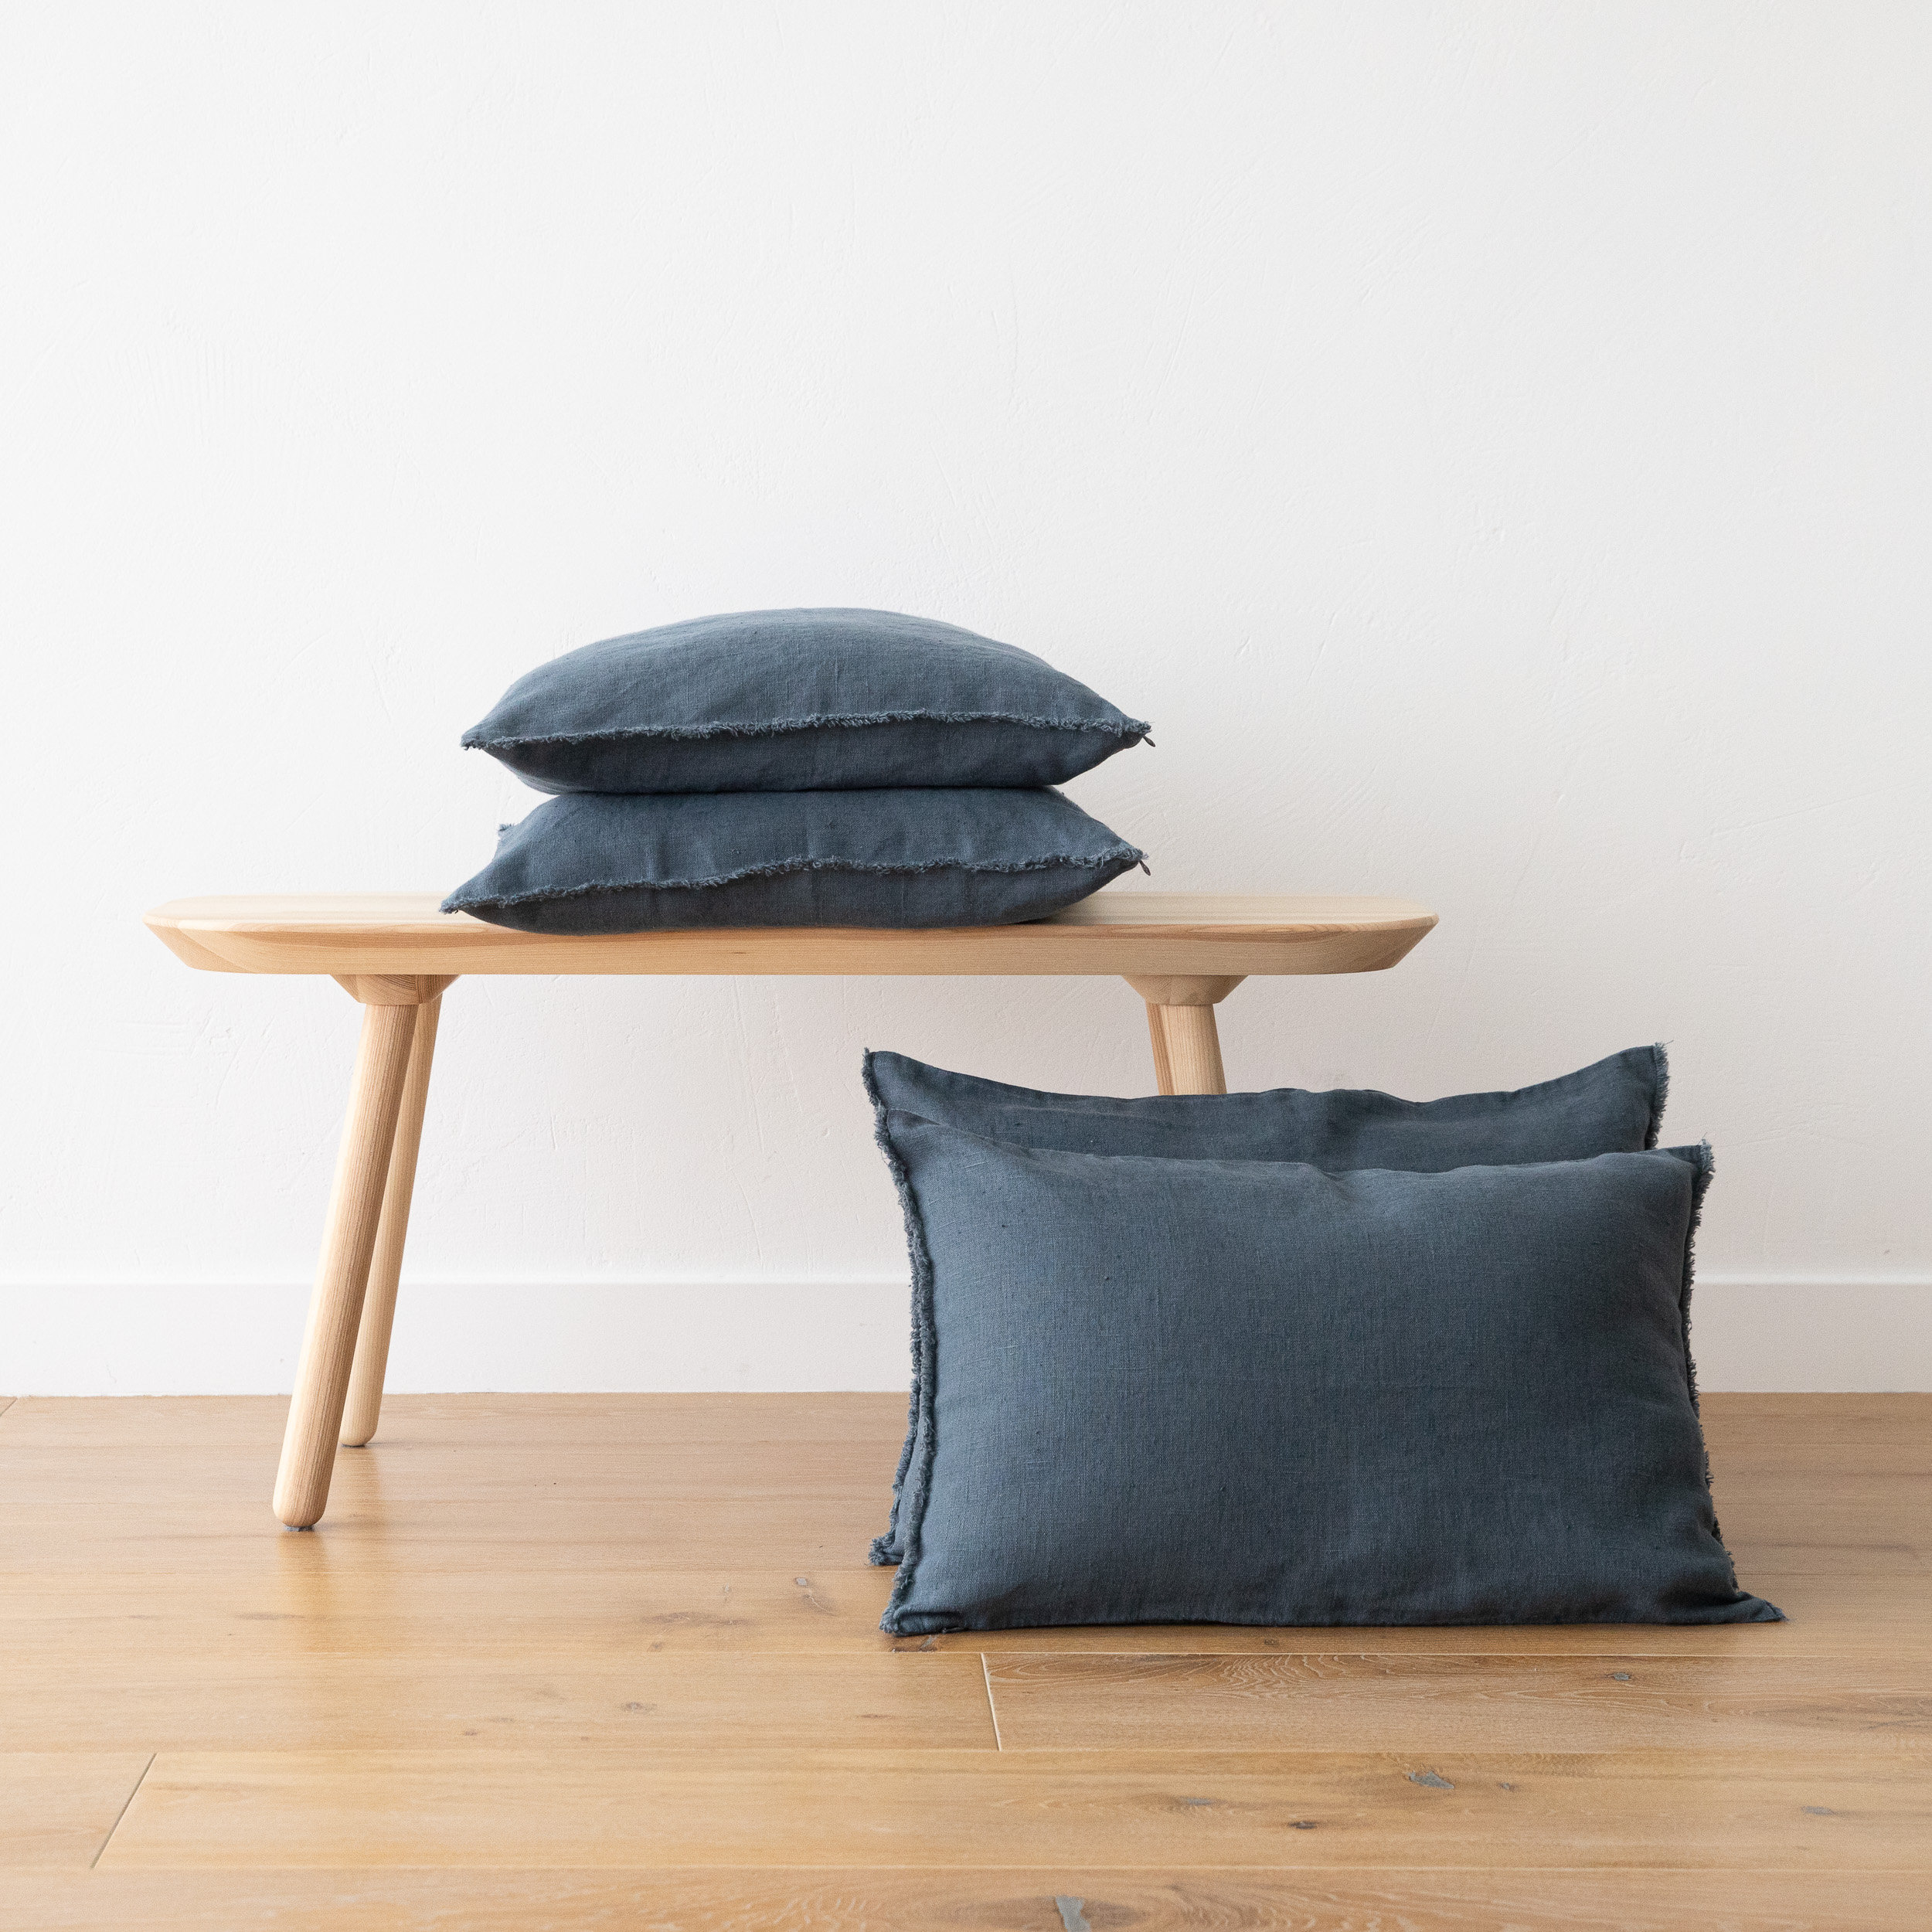 Home Brilliant Burlap Solid Linen European Throw Pillow Sham Cushion Cover for Bench 20x20 Light Linen 50x50cm